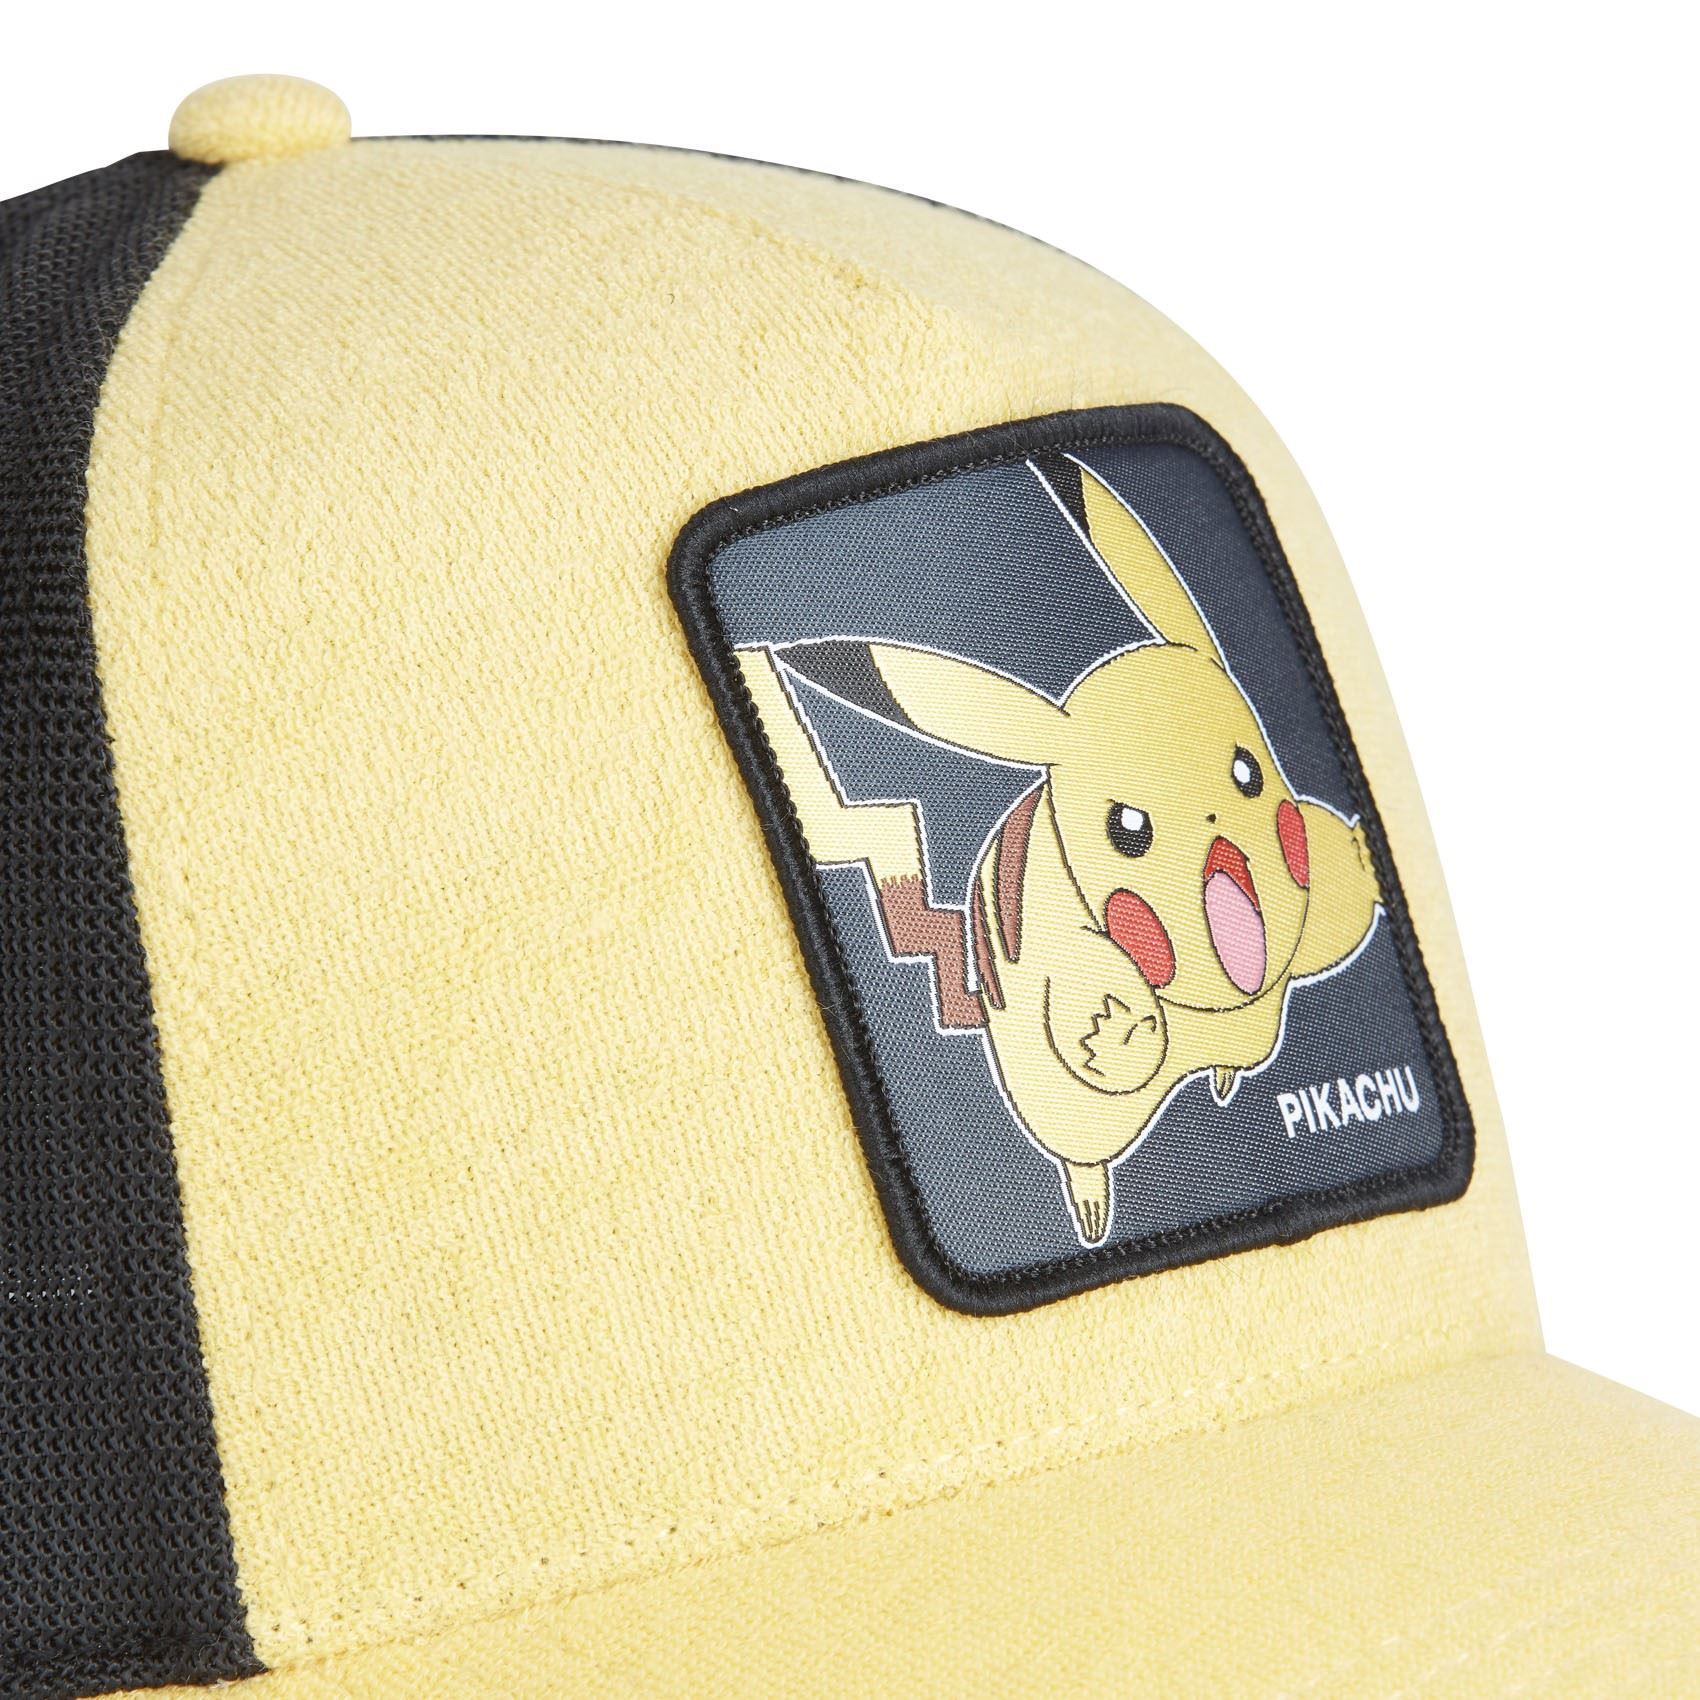 Pikachu Pokemon Gelb Trucker Cap Capslab